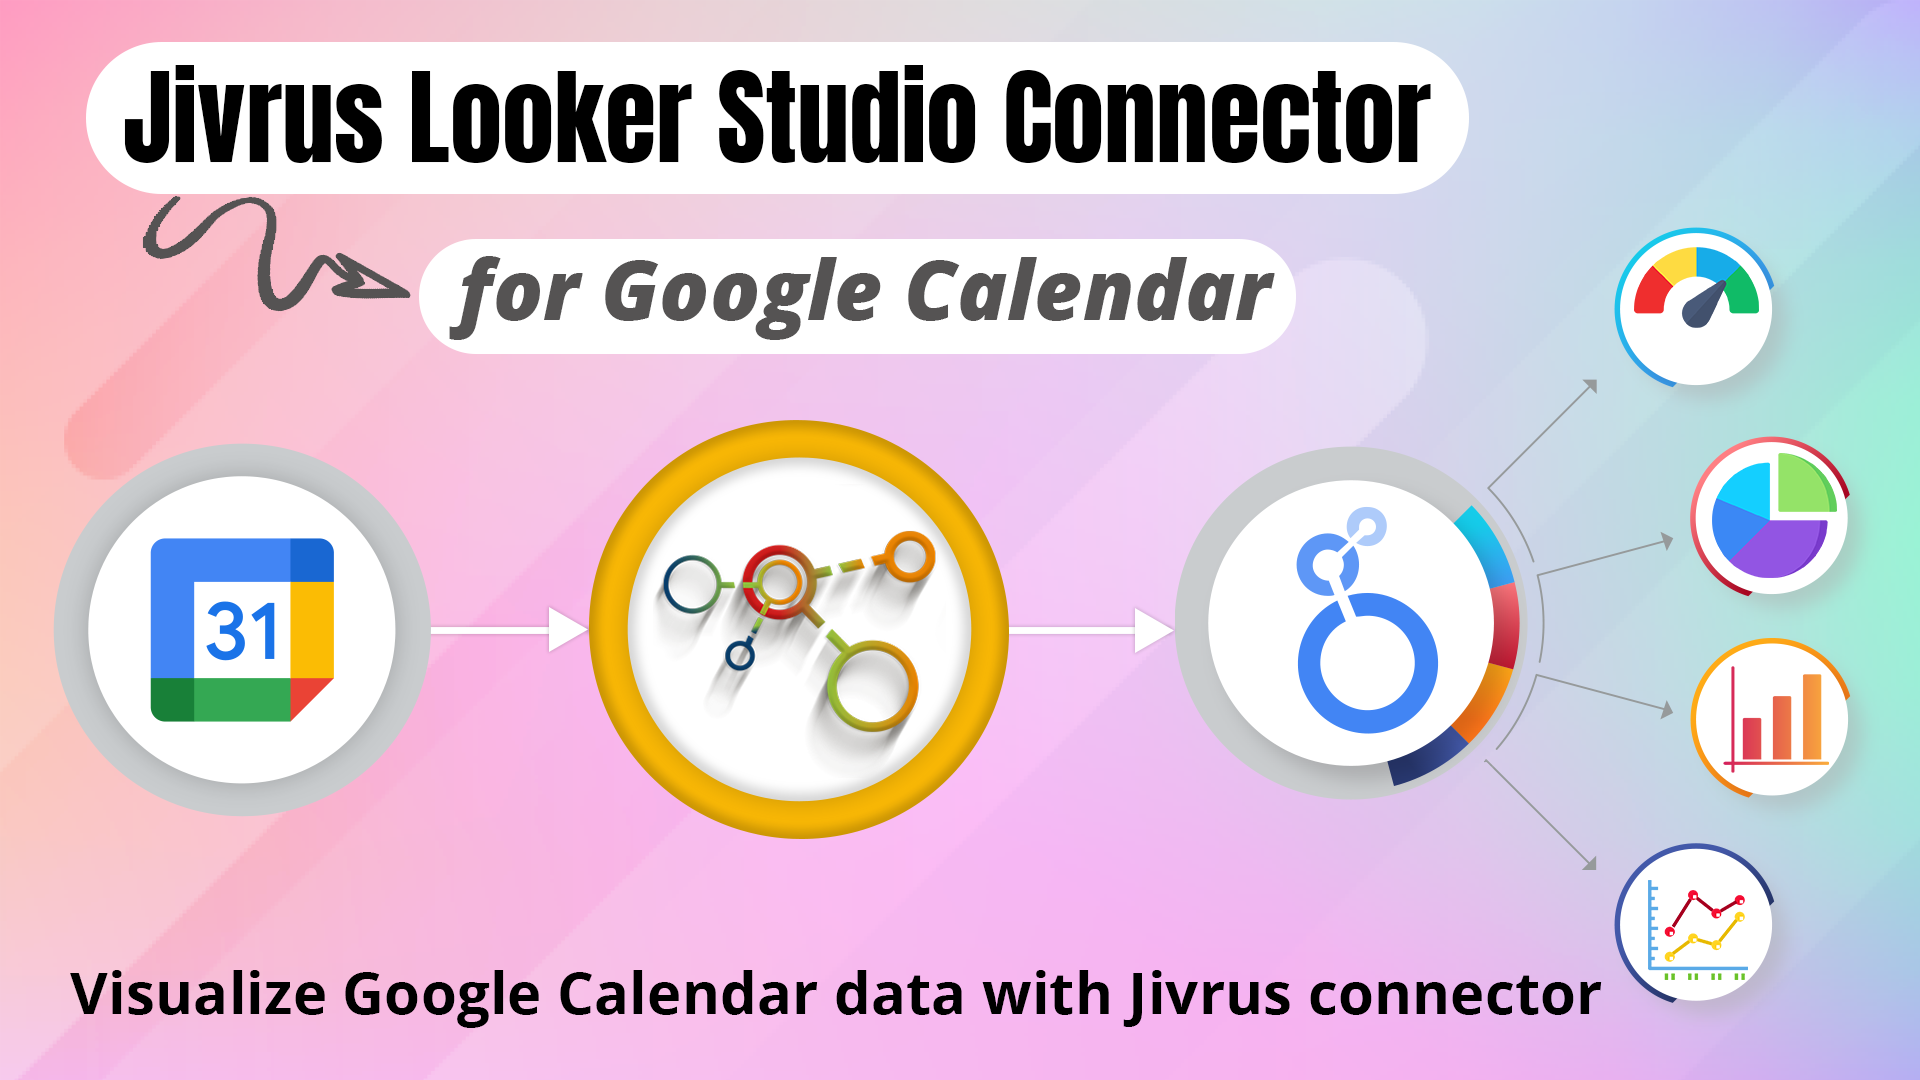 Jivrus Looker Studio Connector for Google Calendar